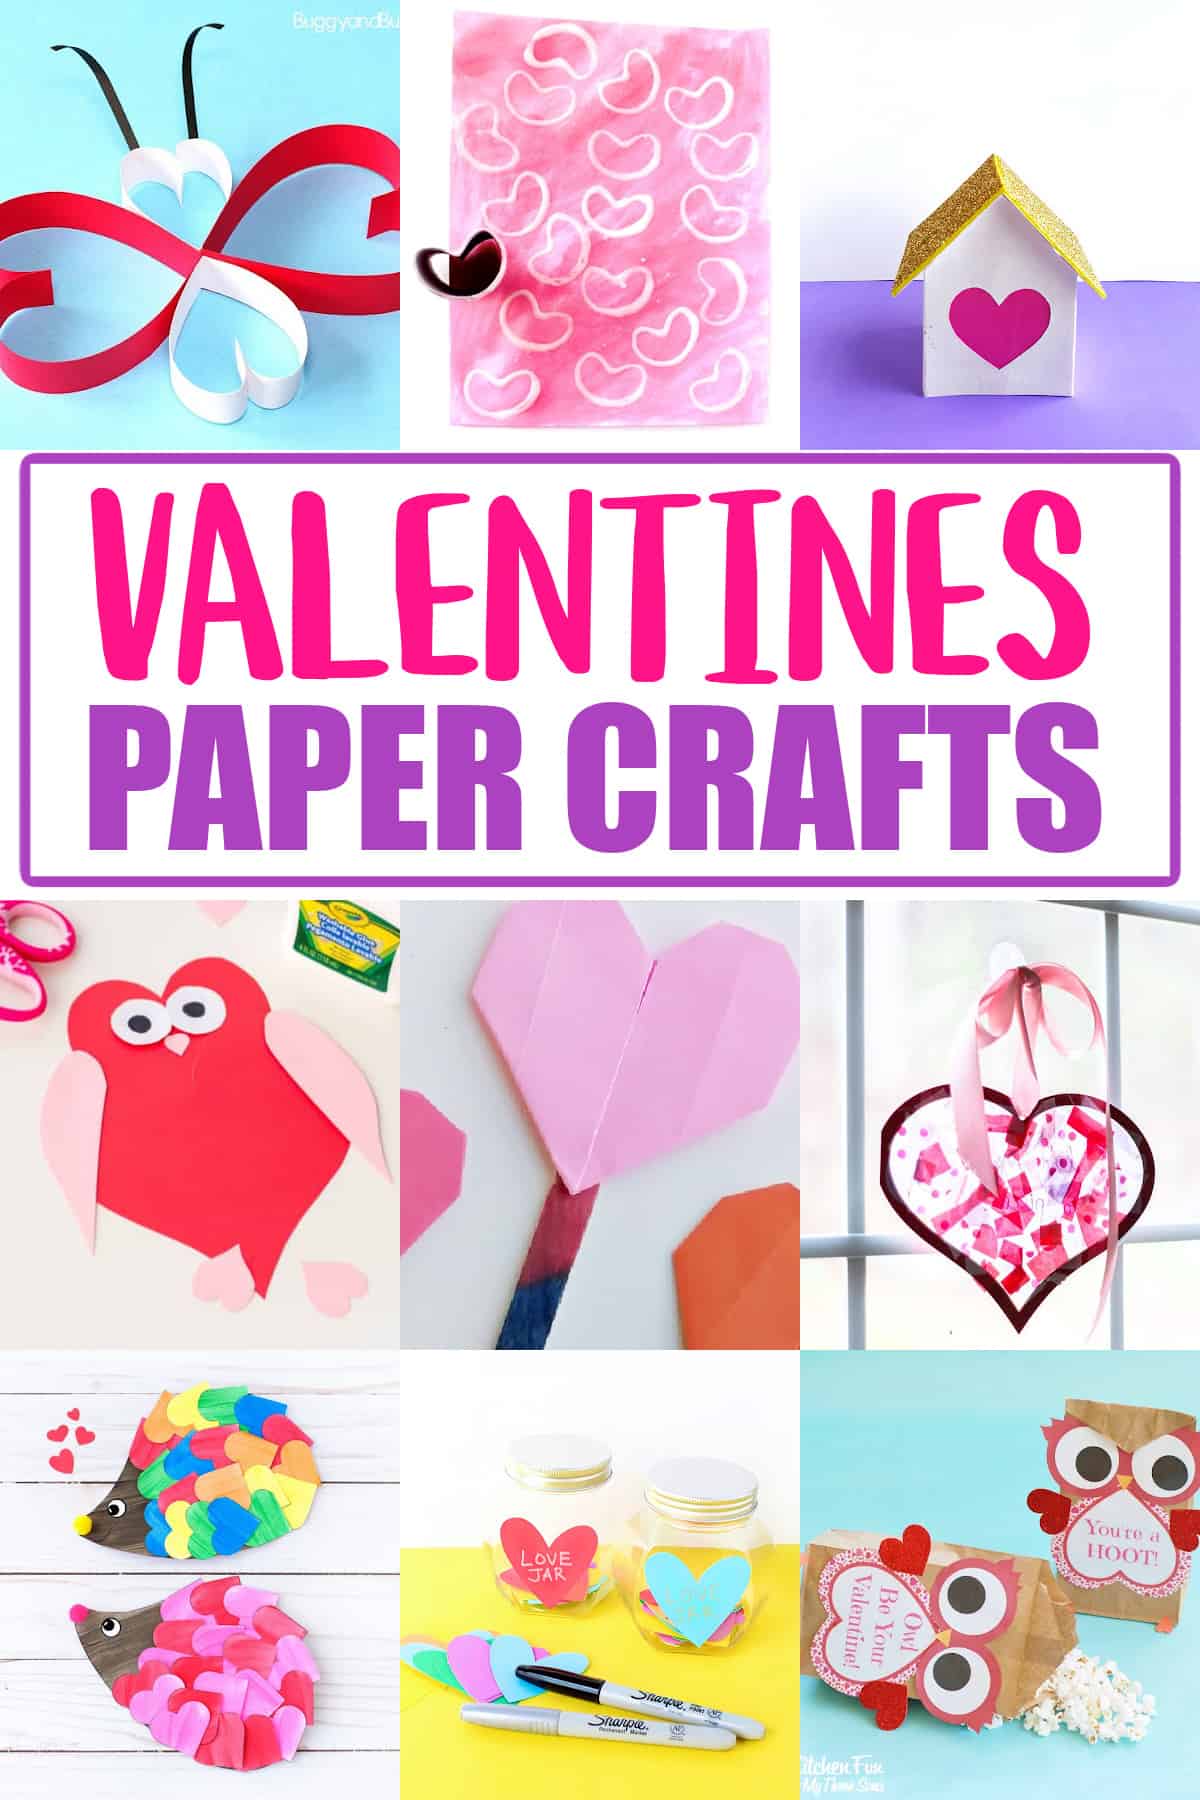 Valentine's Day Crafts for Kids